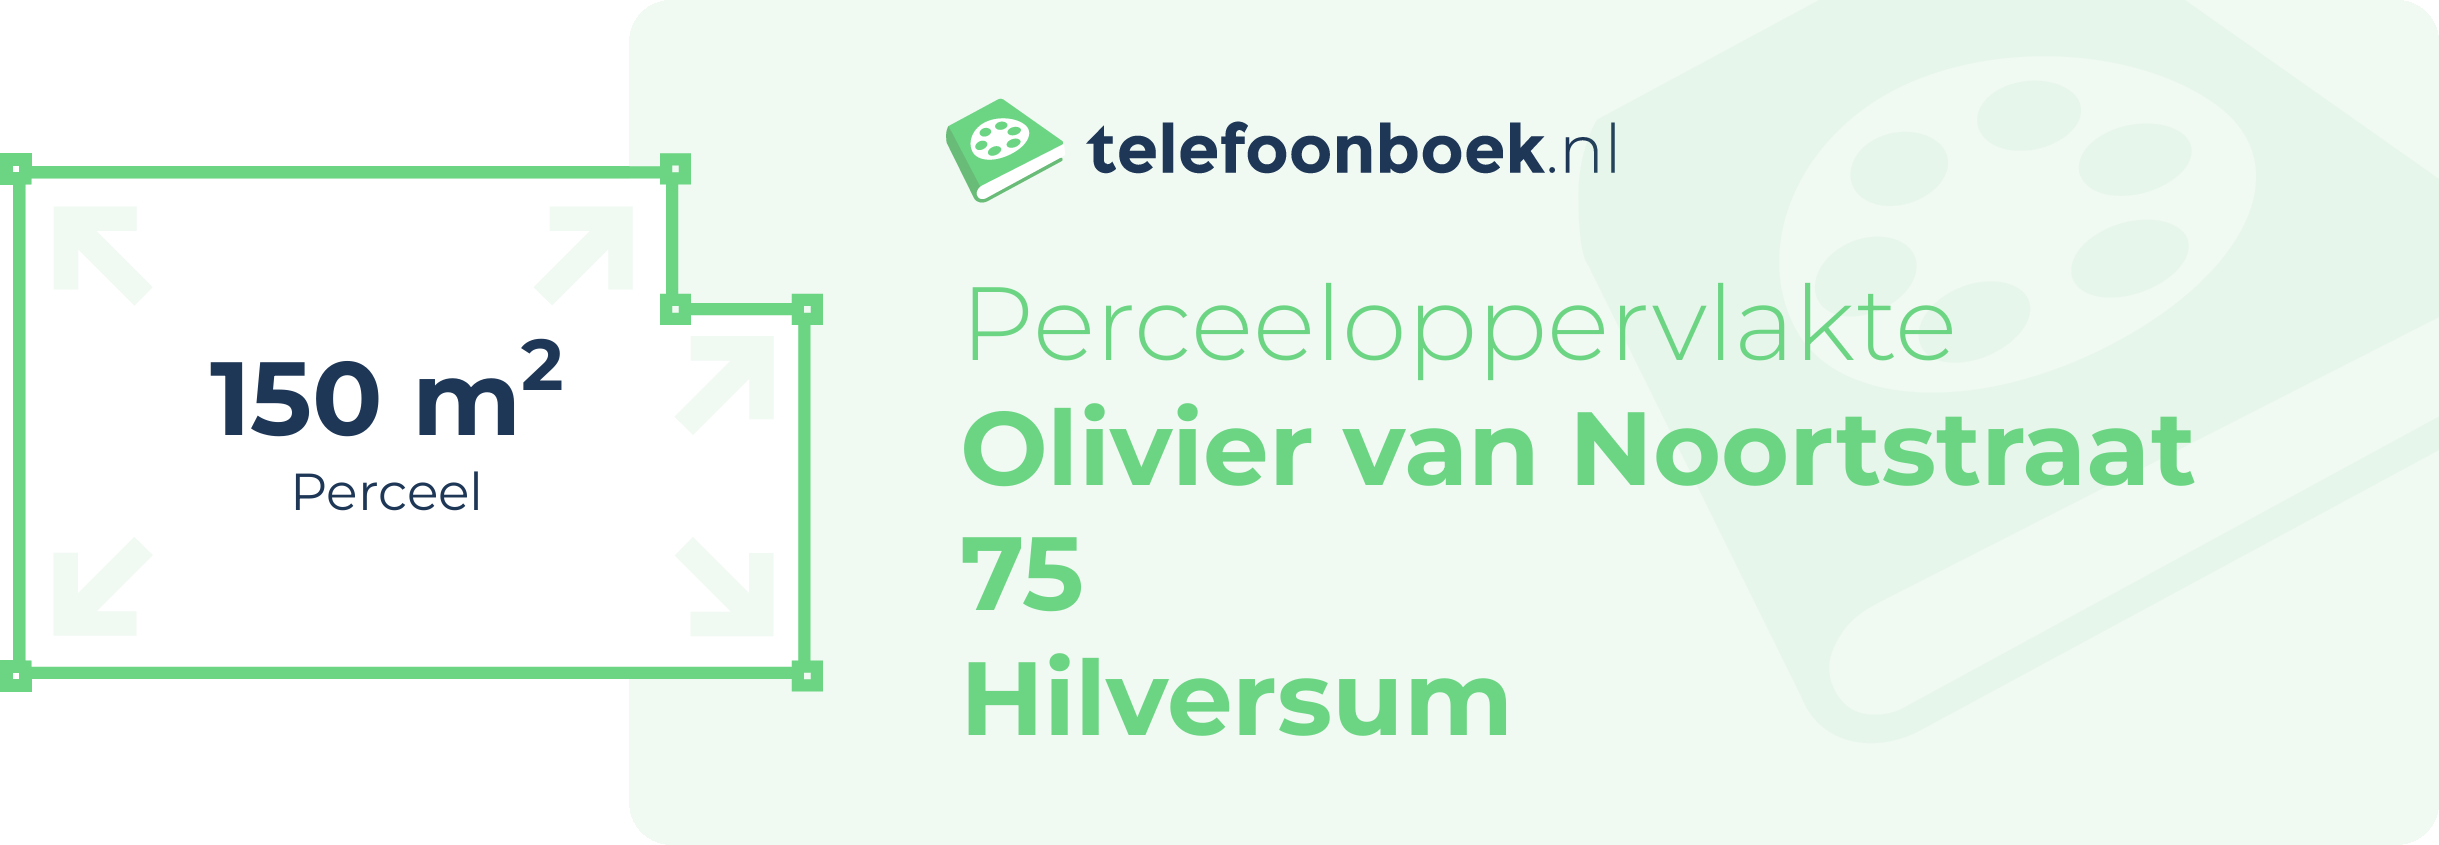 Perceeloppervlakte Olivier Van Noortstraat 75 Hilversum